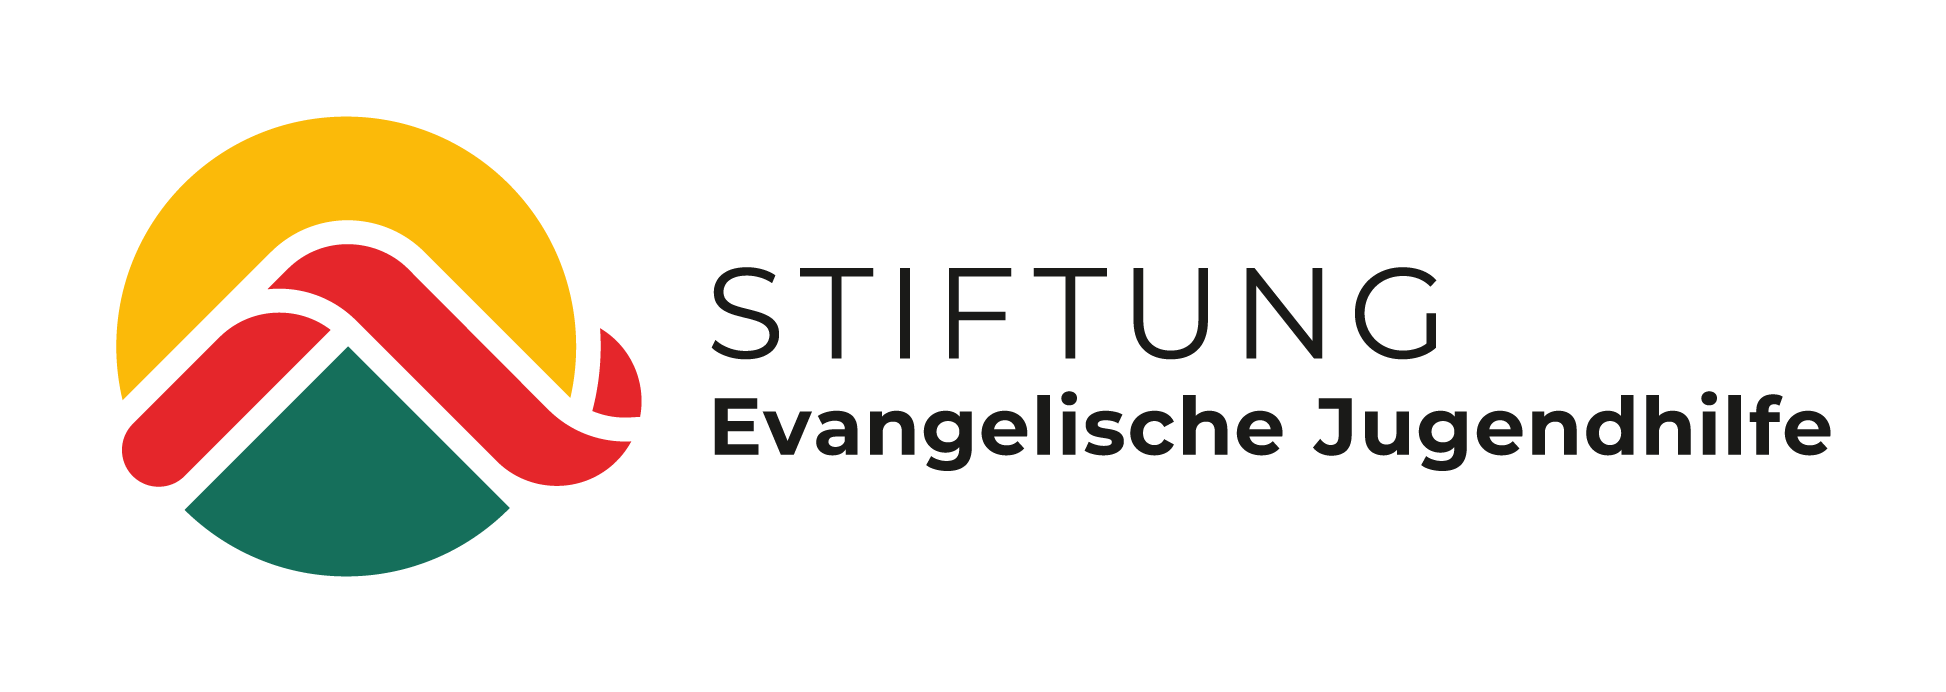 Logo_Stiftung_WEB.png